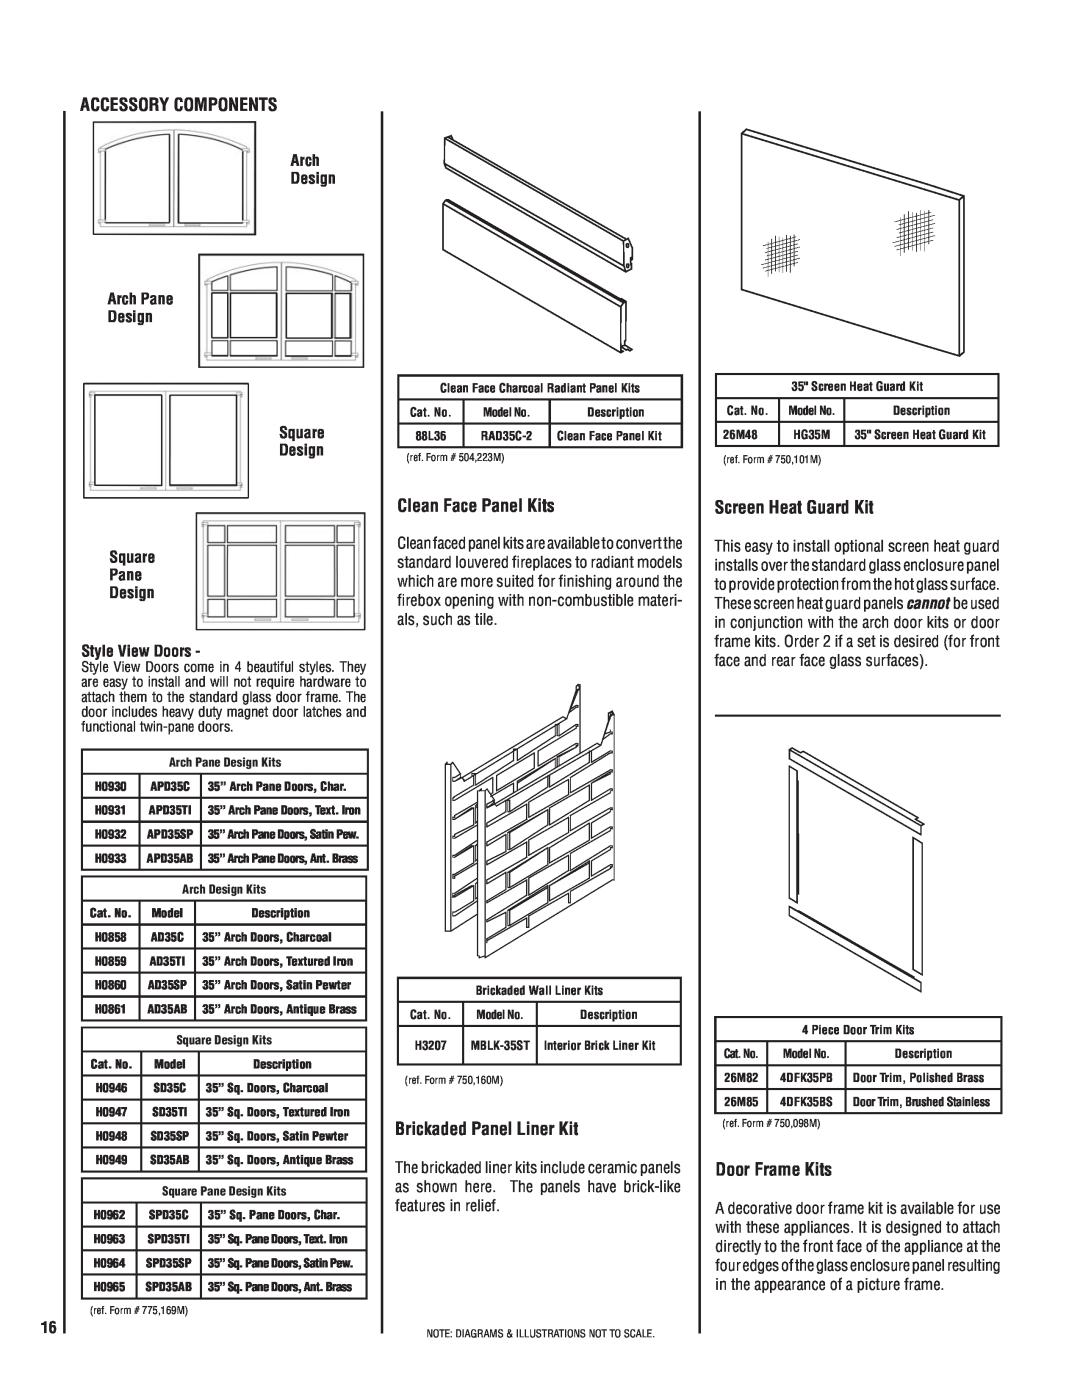 Lennox International Inc MPB35ST-NM manual Accessory Components, Clean Face Panel Kits, Brickaded Panel Liner Kit 